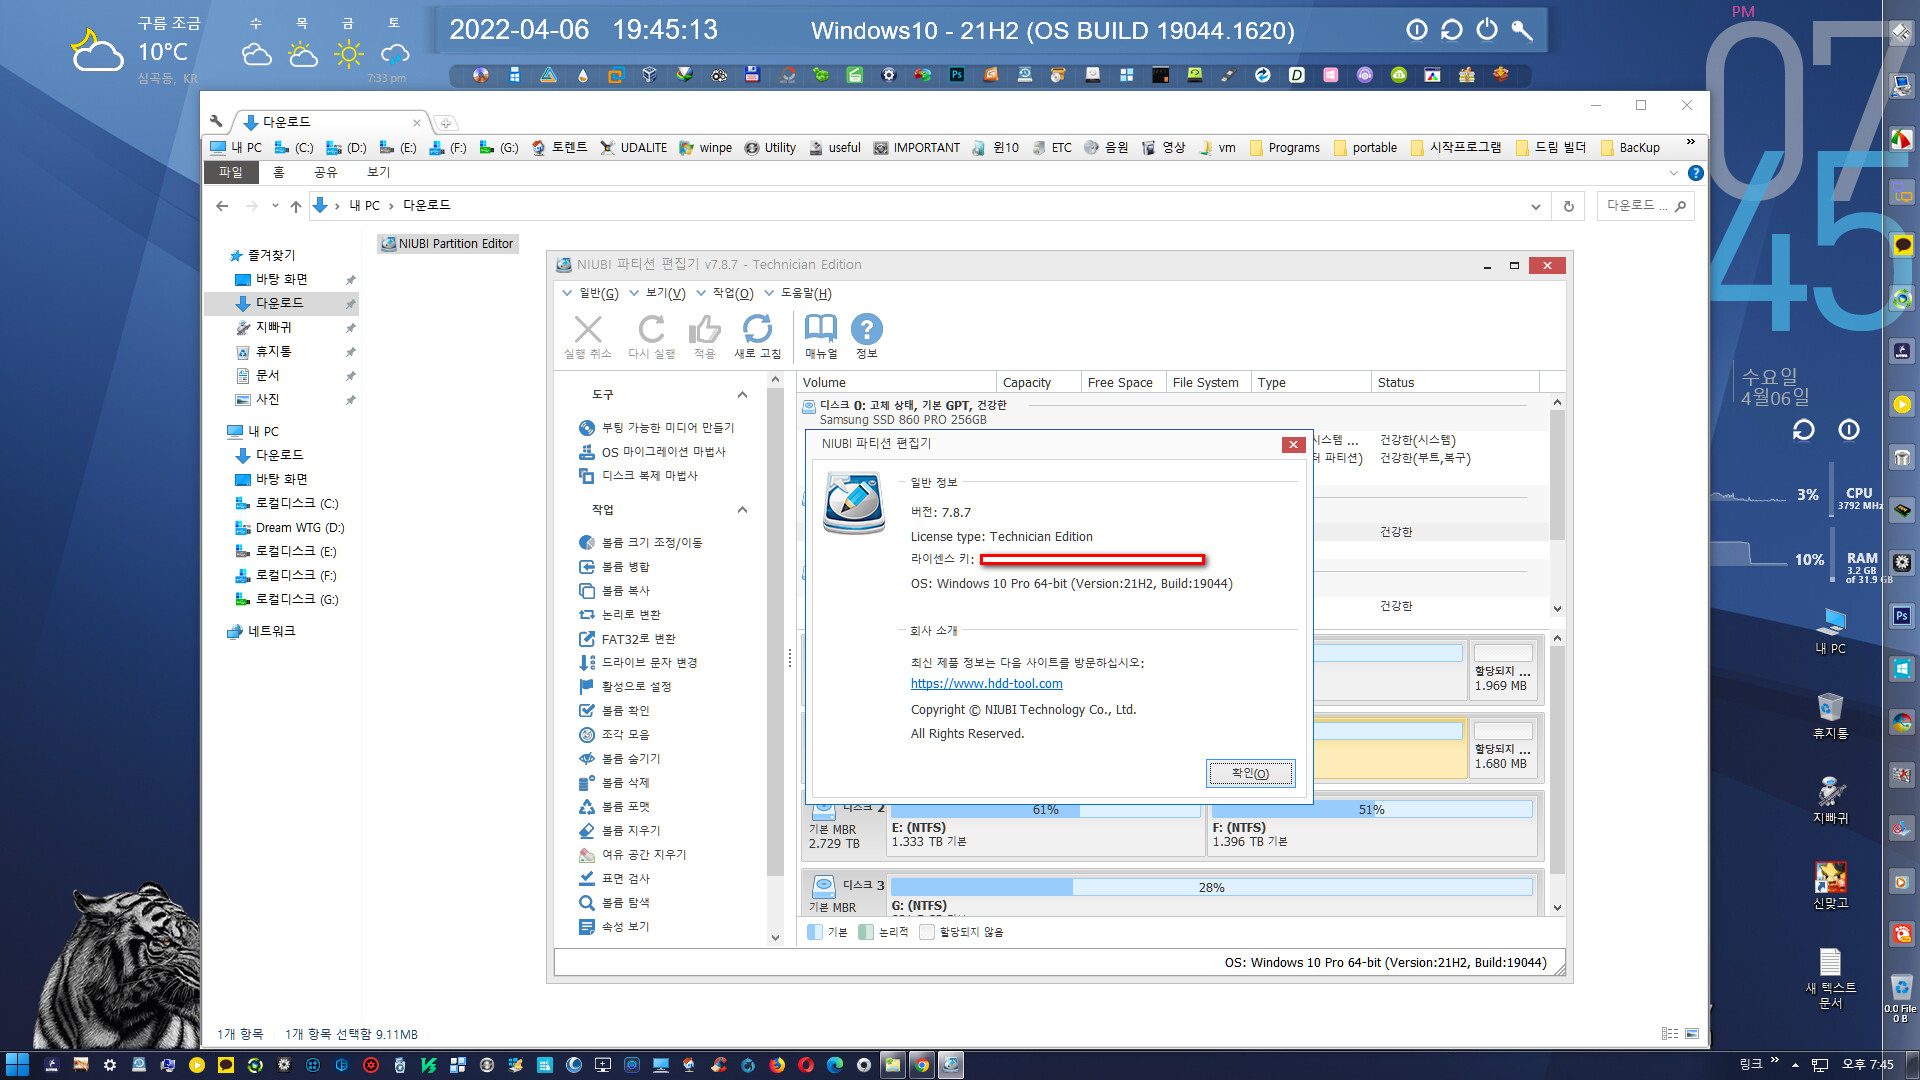 NIUBI Partition Editor Pro / Technician 9.8.0 download the last version for windows